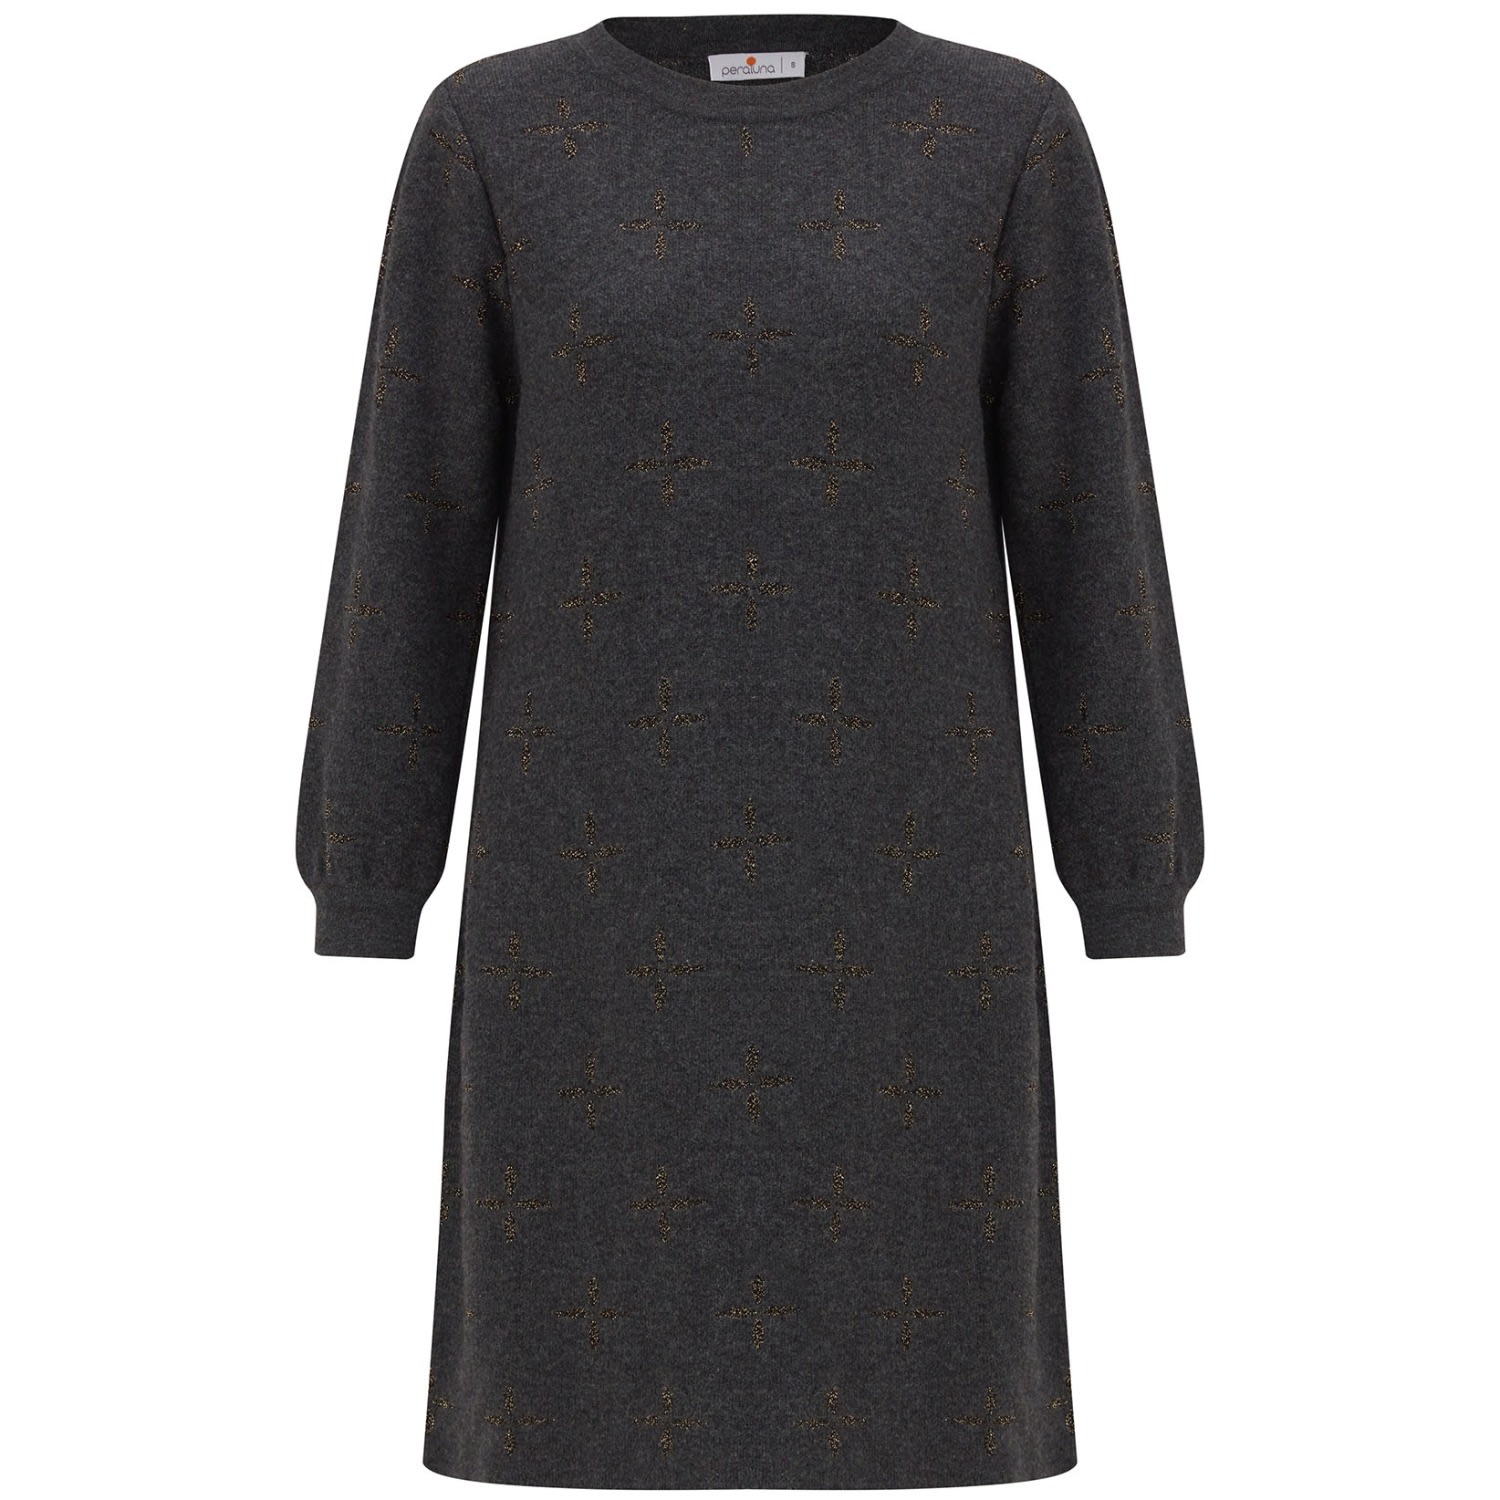 Women’s Grey Lucia Subtle Lurex Jacquard Pattern Knit Dress - Anthracite Melange Small Peraluna